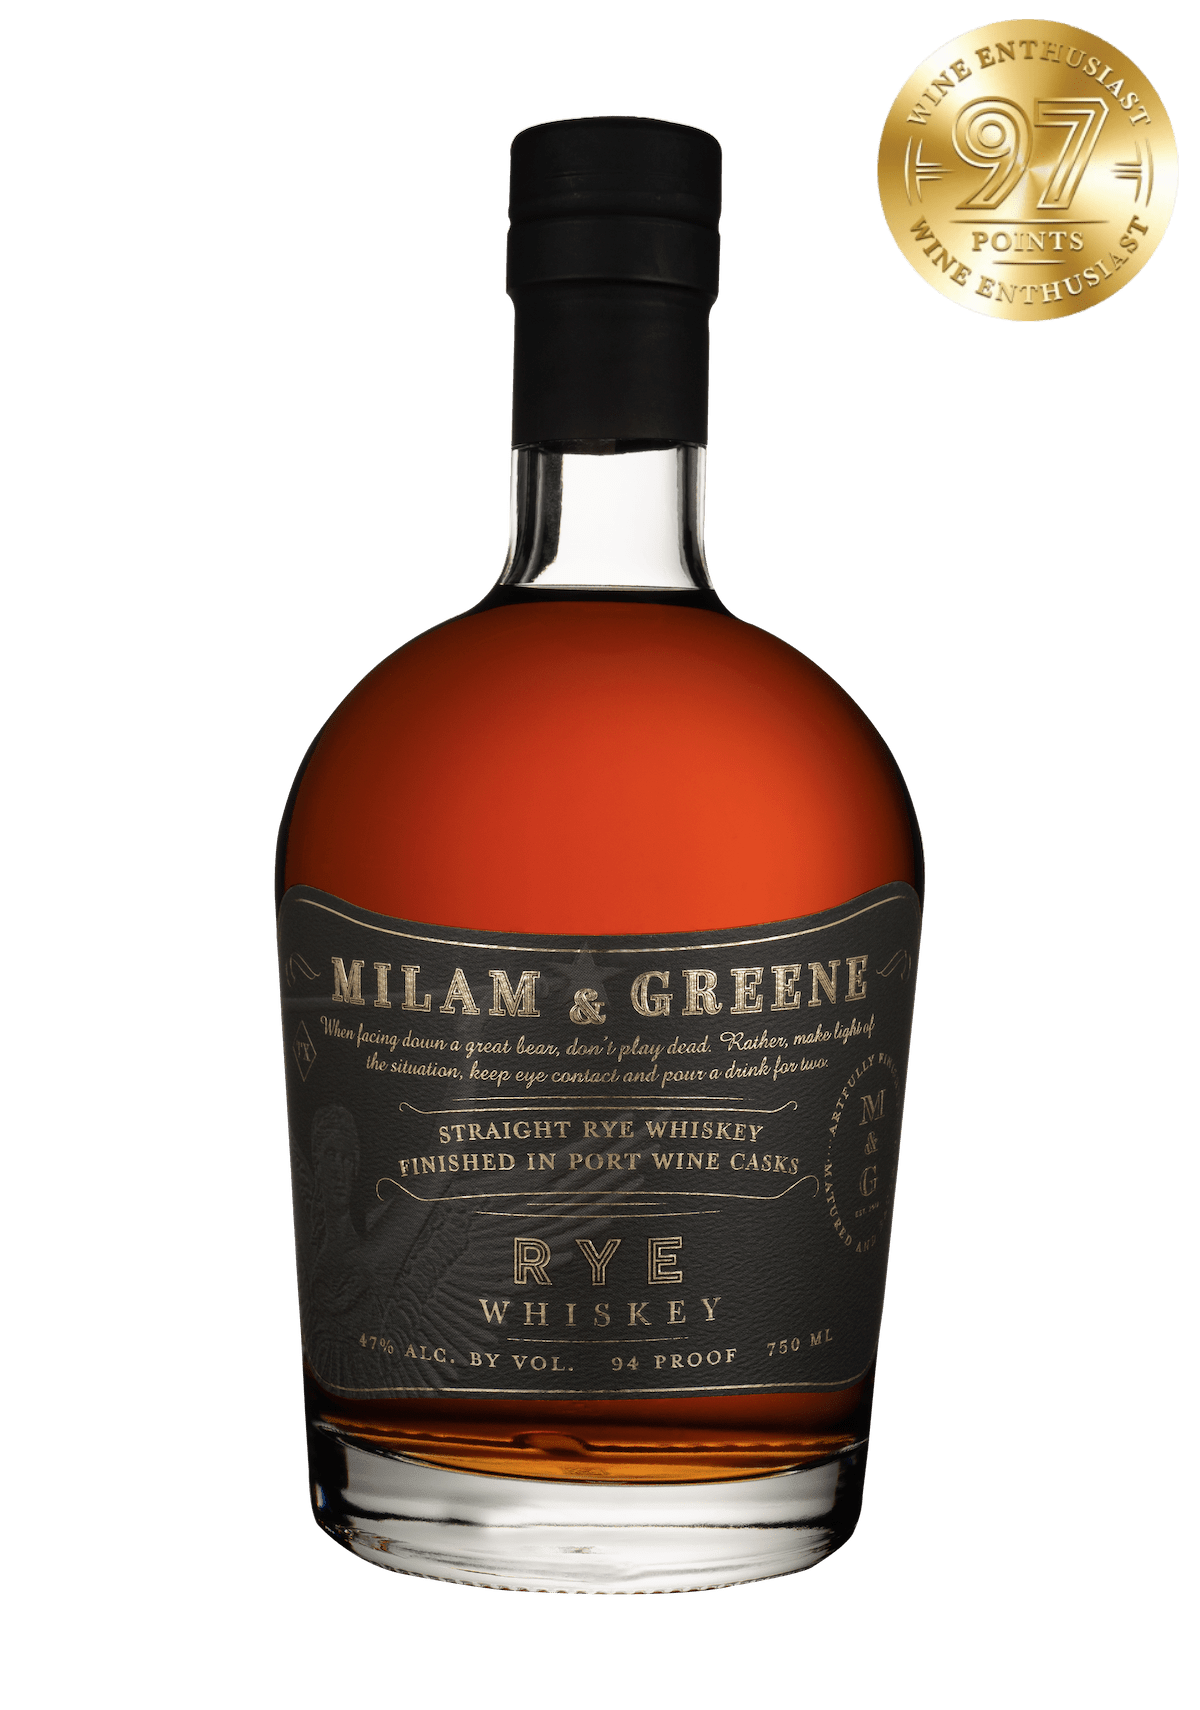 Milam & Greene Straight Rye Finished In Port Wine Casks